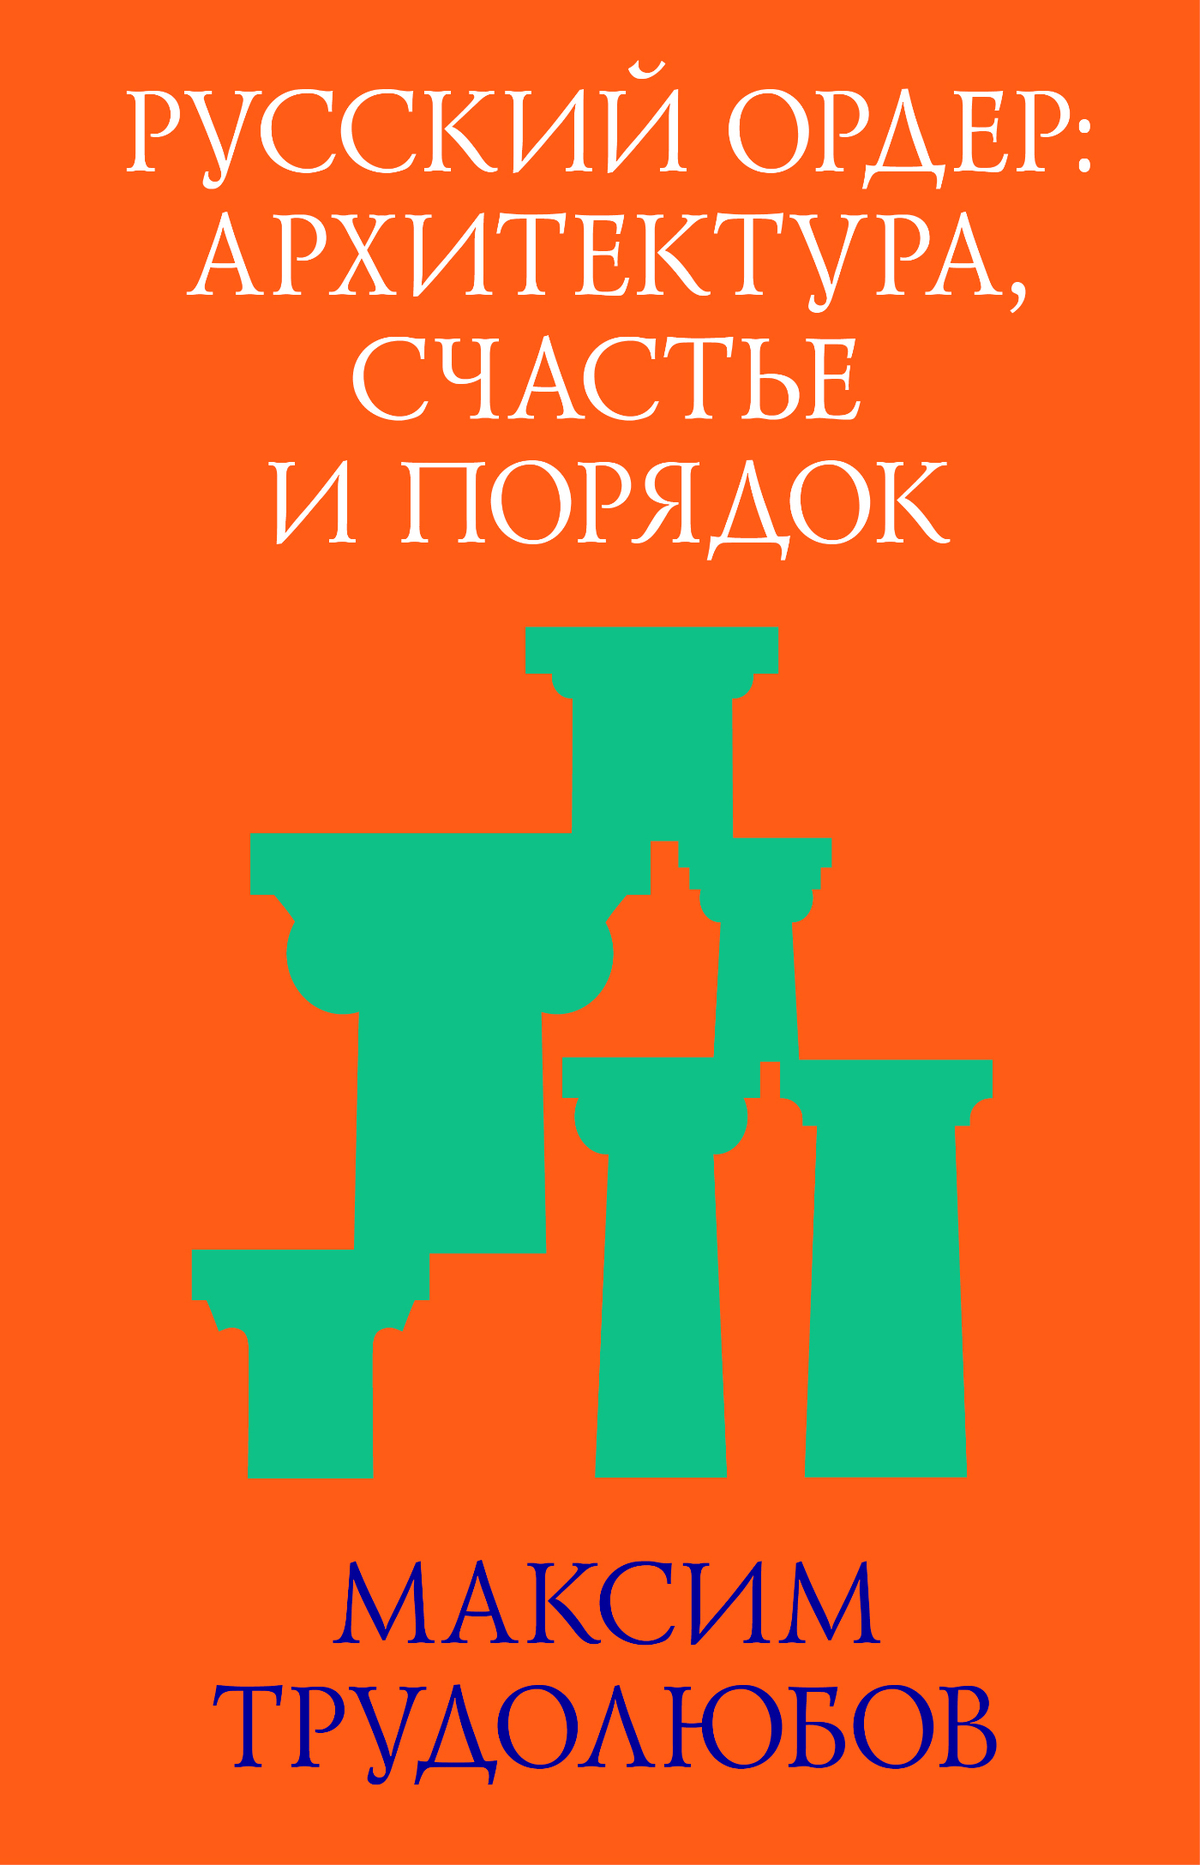 Russkiy order: Architectura, schastje i porjadok.